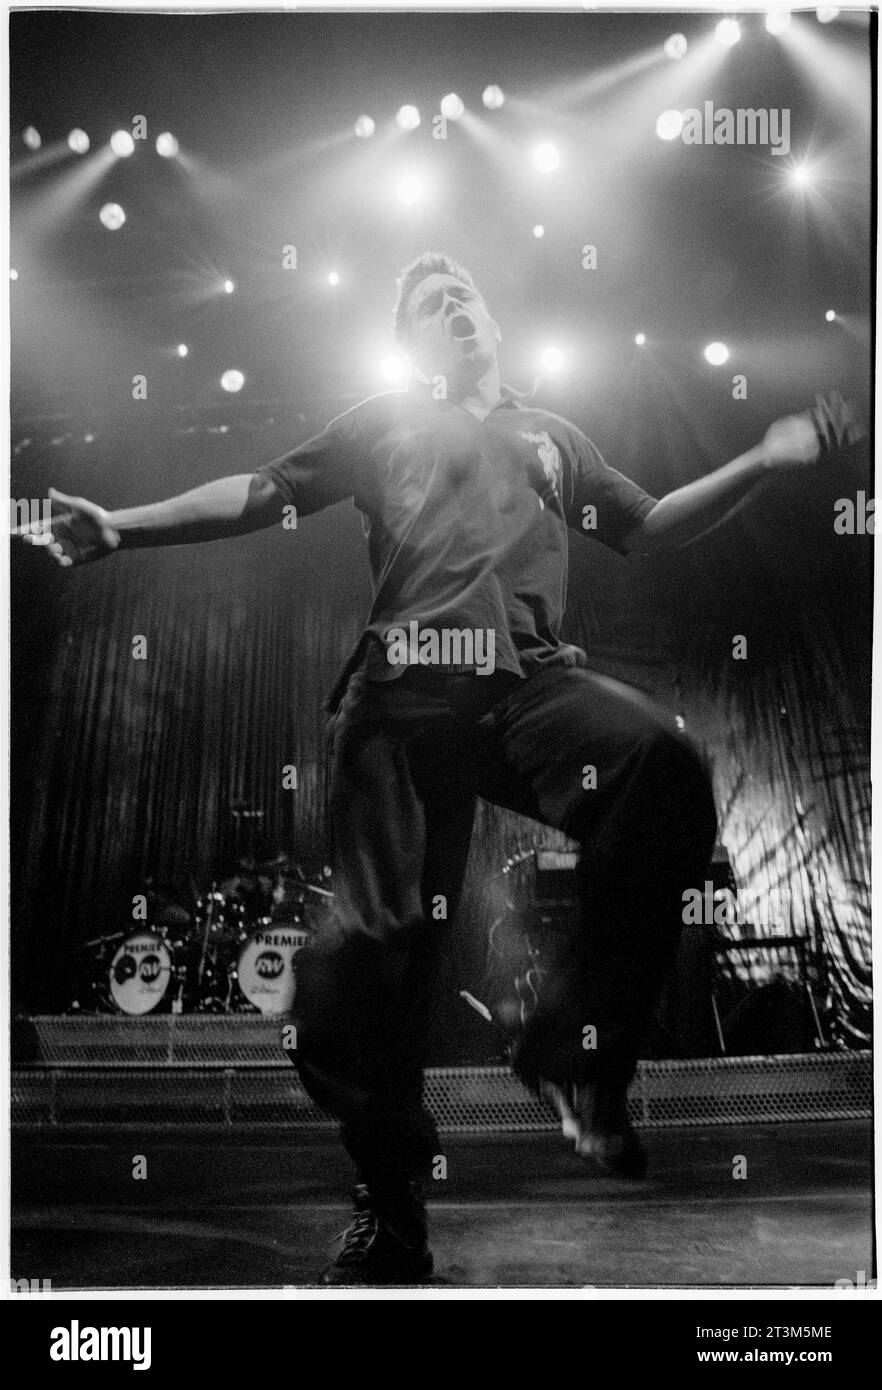 ROBBIE WILLIAMS, CARDIFF, 1999: Robbie Williams Dancing on His Ego has Landing Tour in Cardiff International Arena CIA am 4. Februar 1999. Foto: Rob Watkins Stockfoto